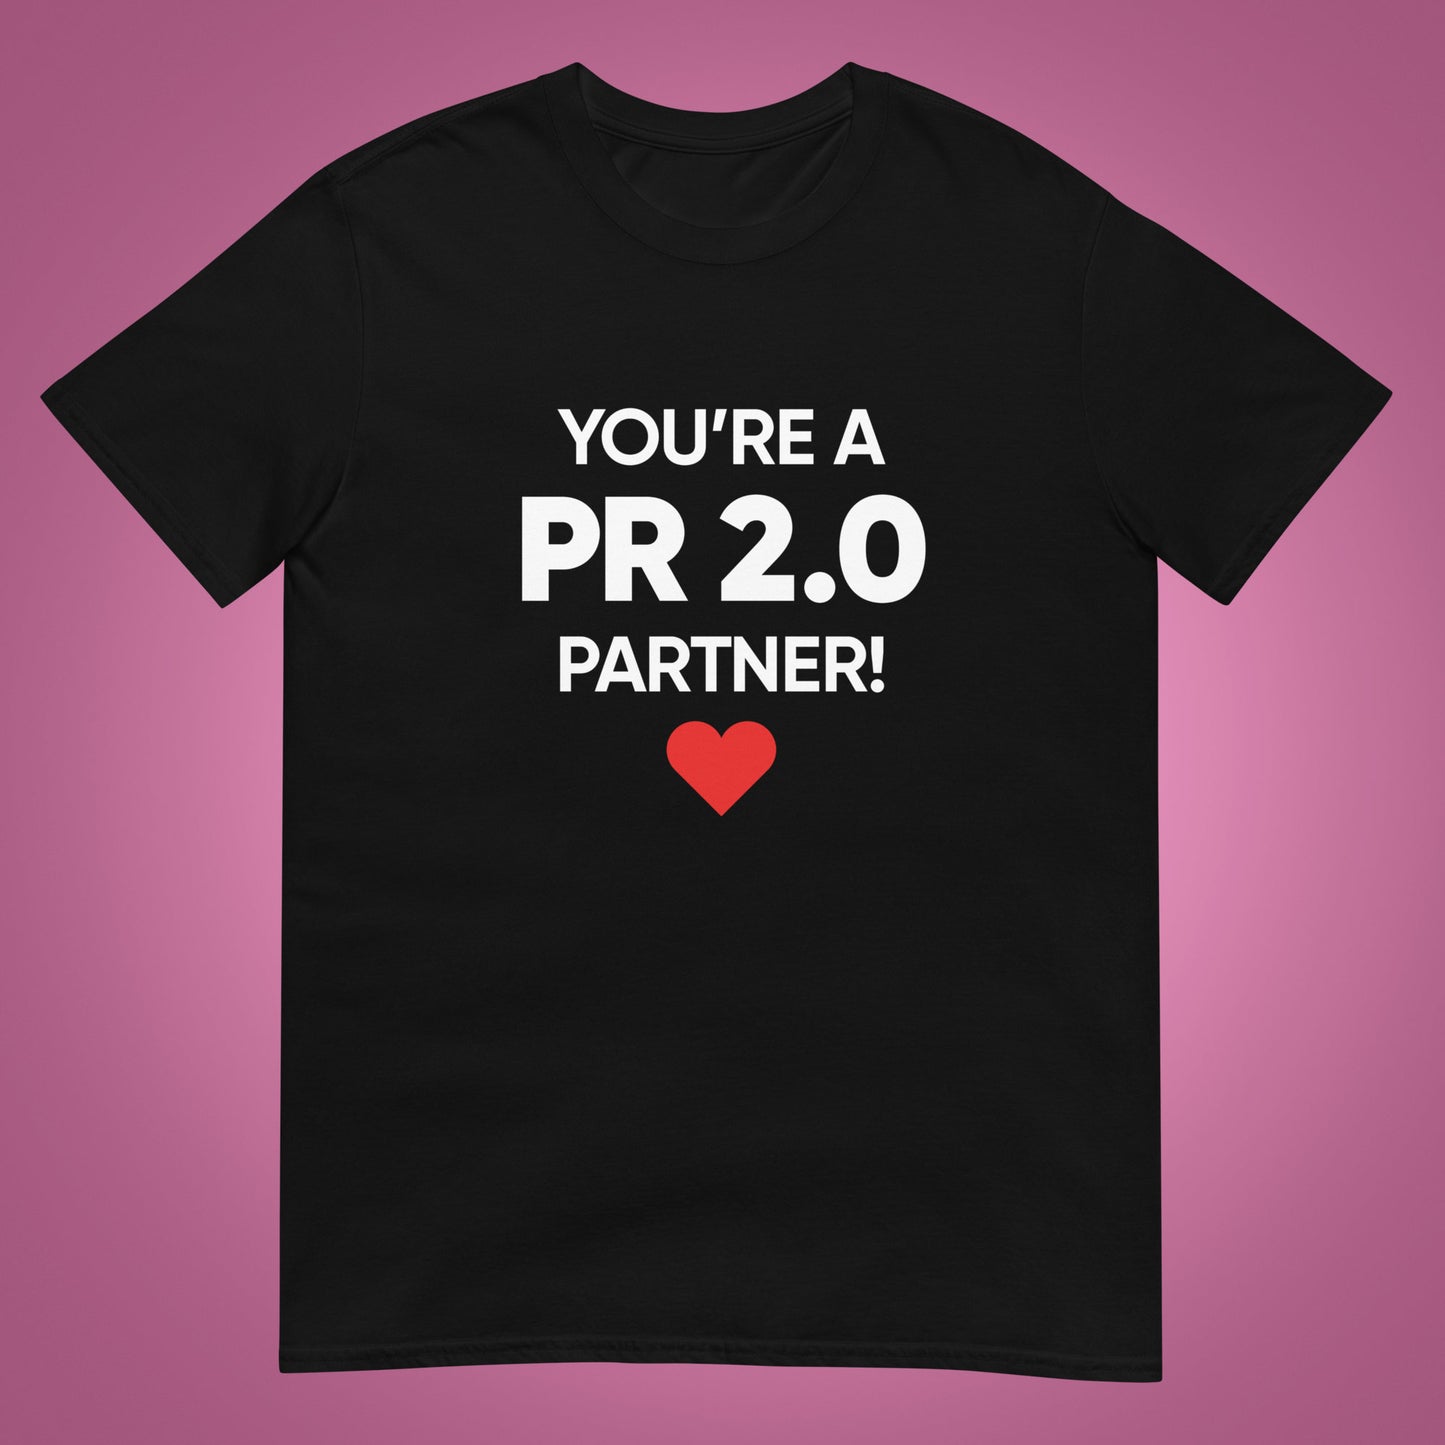 "You're a PR 2.0 Partner" T-Shirt